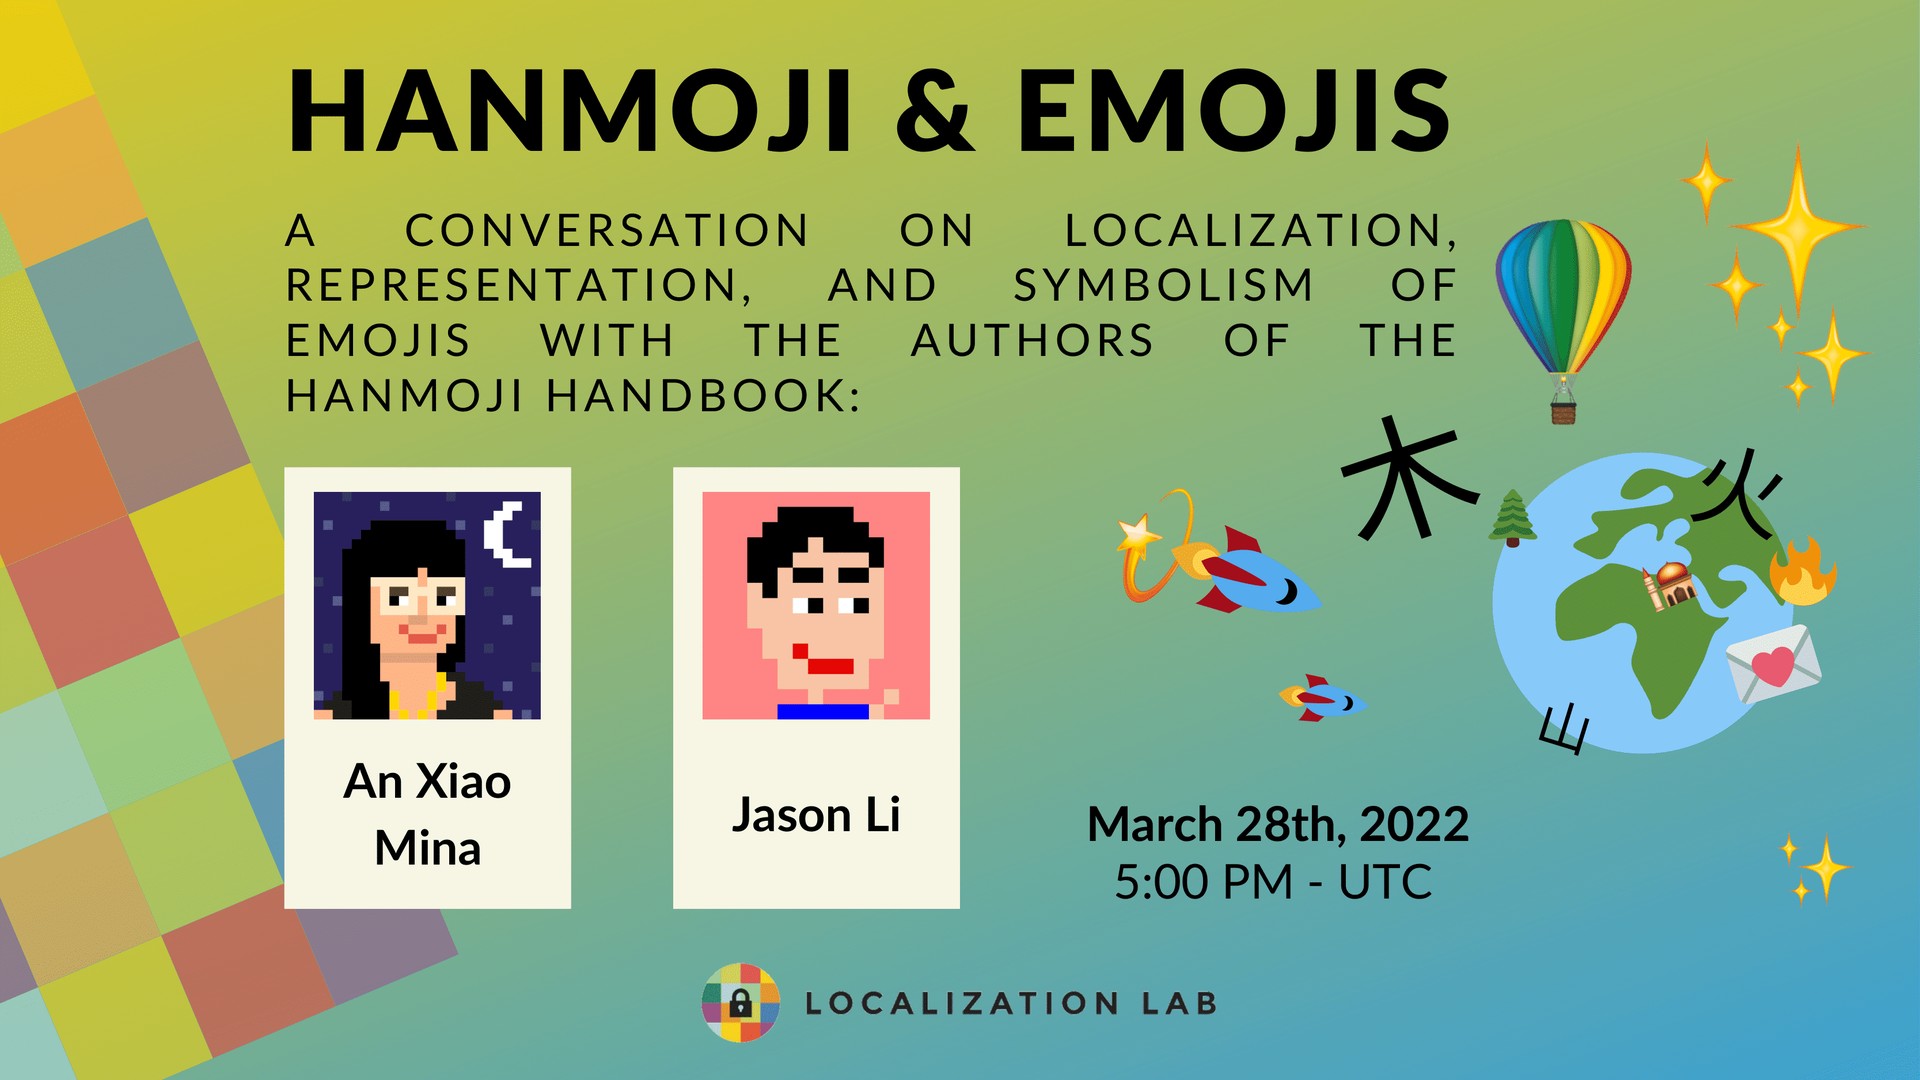 Hanmoji & Emojis: A Conversation on localization, representation, and symbolism of emoji characters